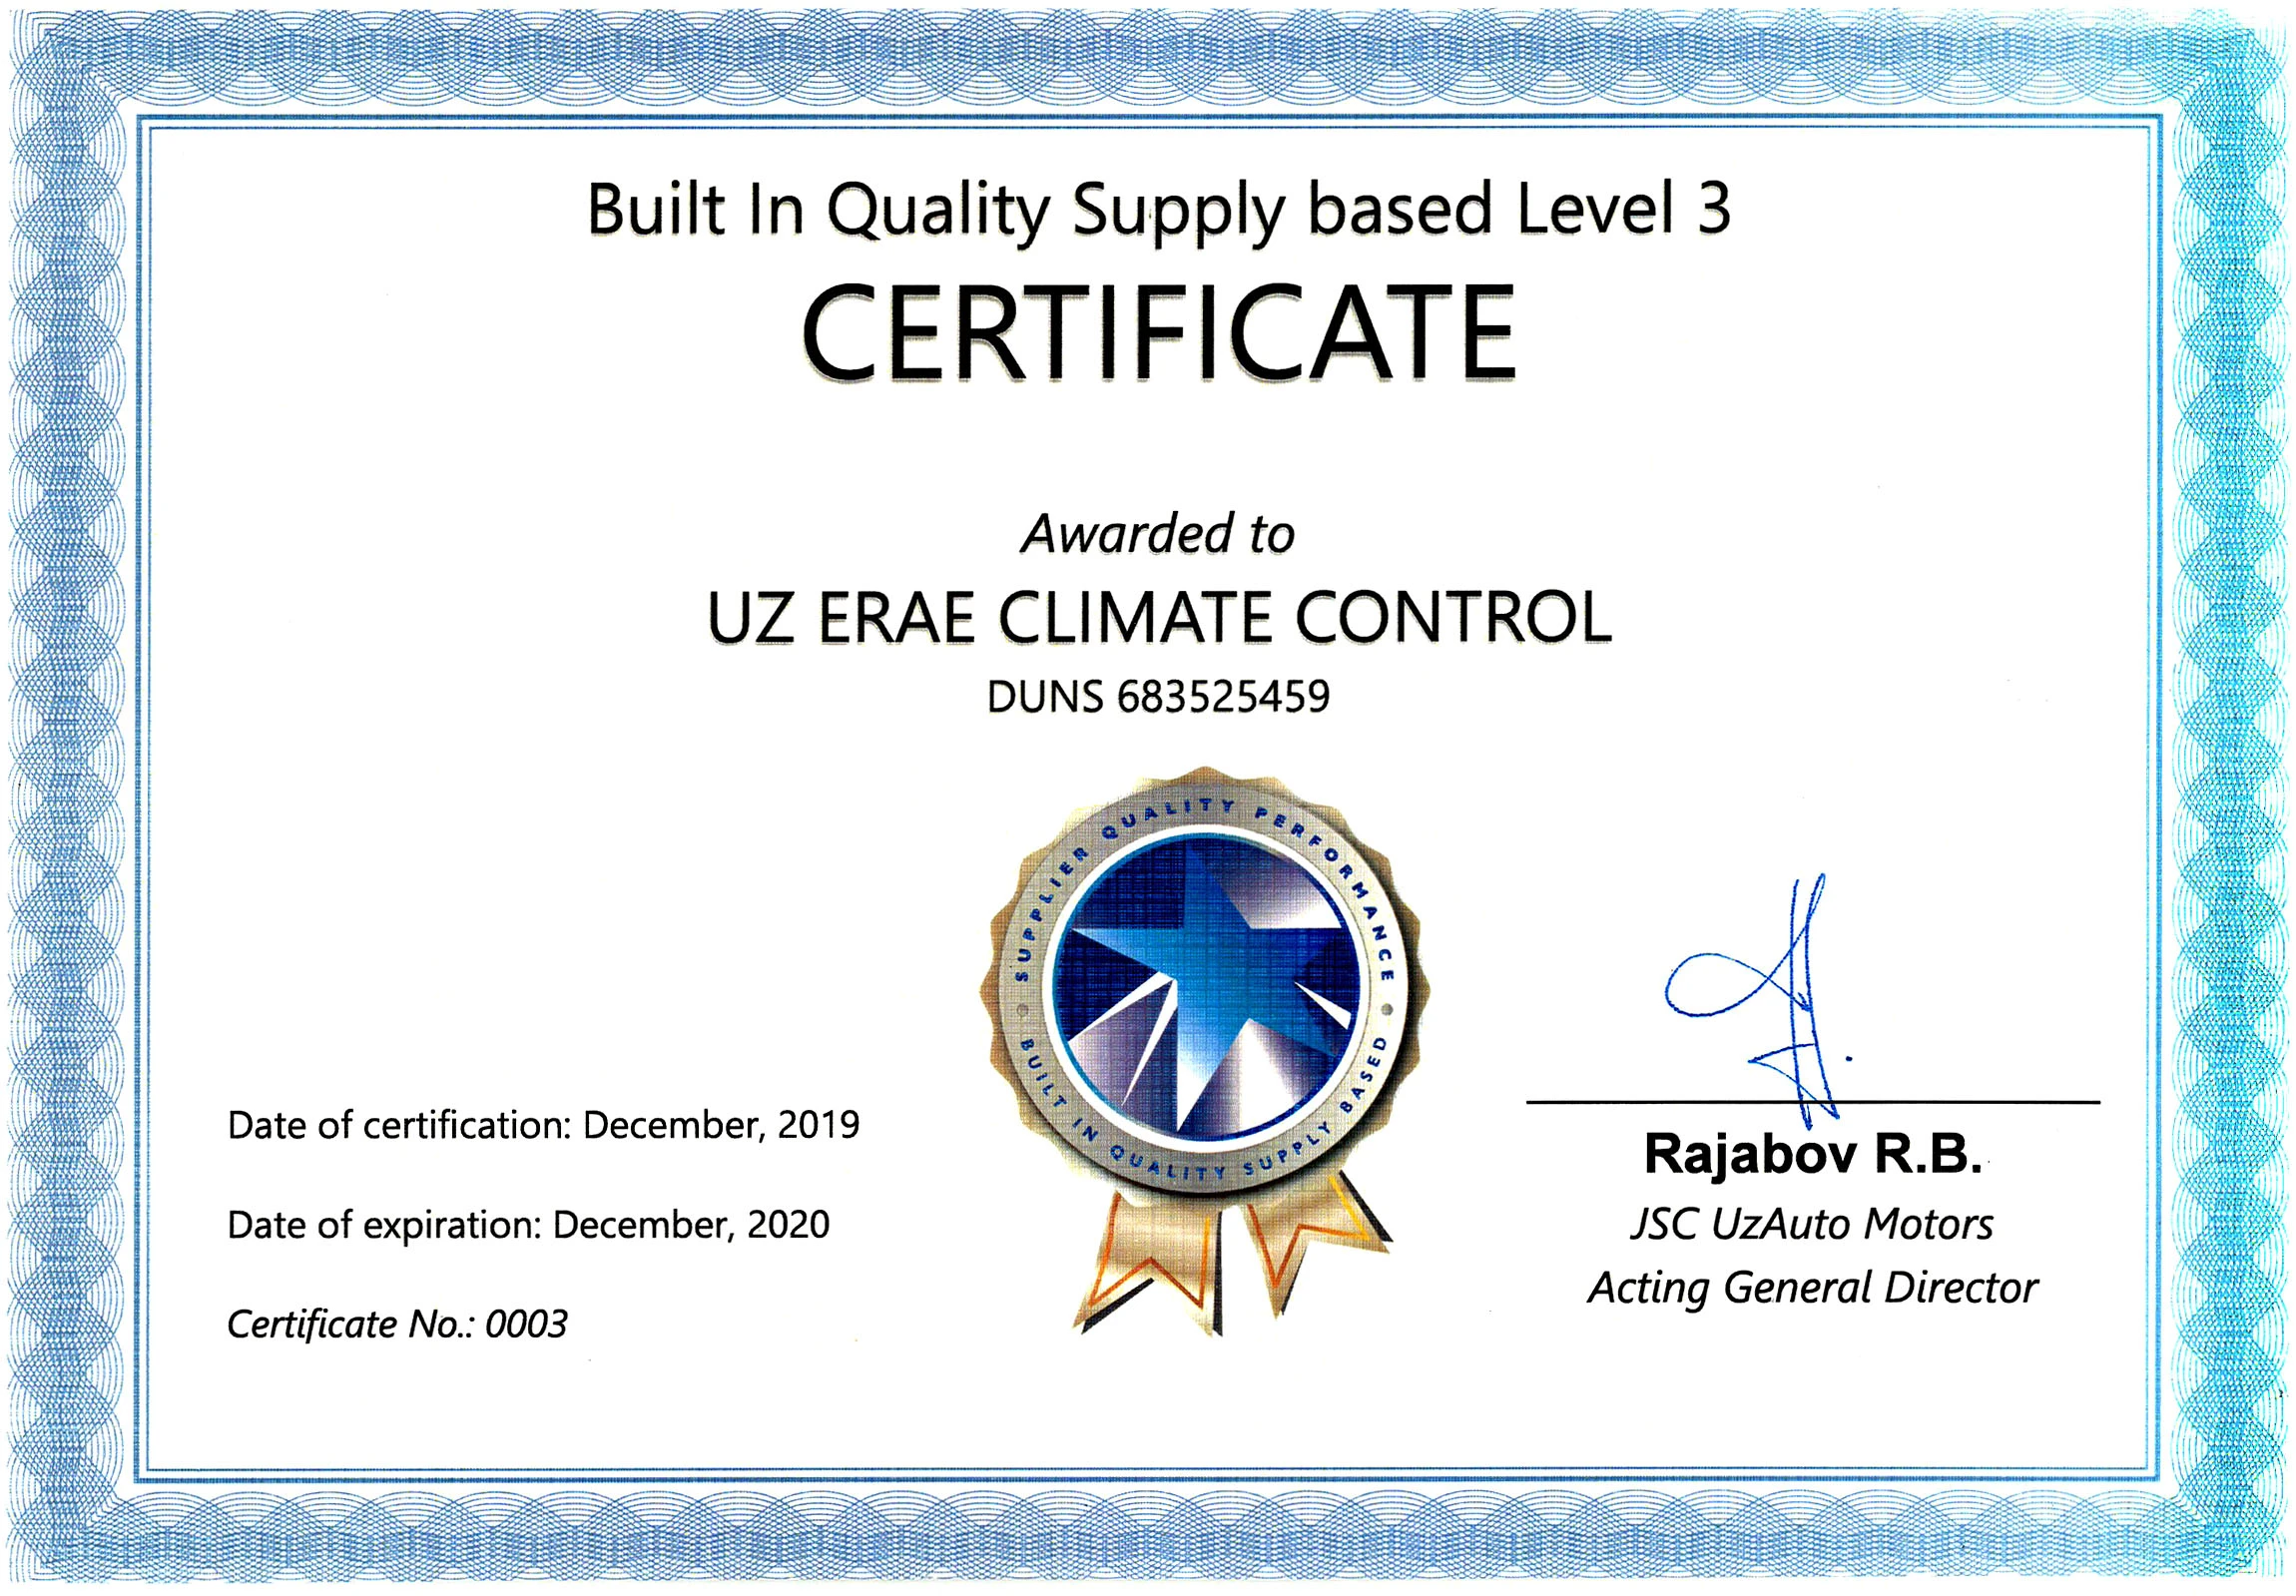 UzAuto Motors 3-darajali sifat sertifikatini taqdim etdi.